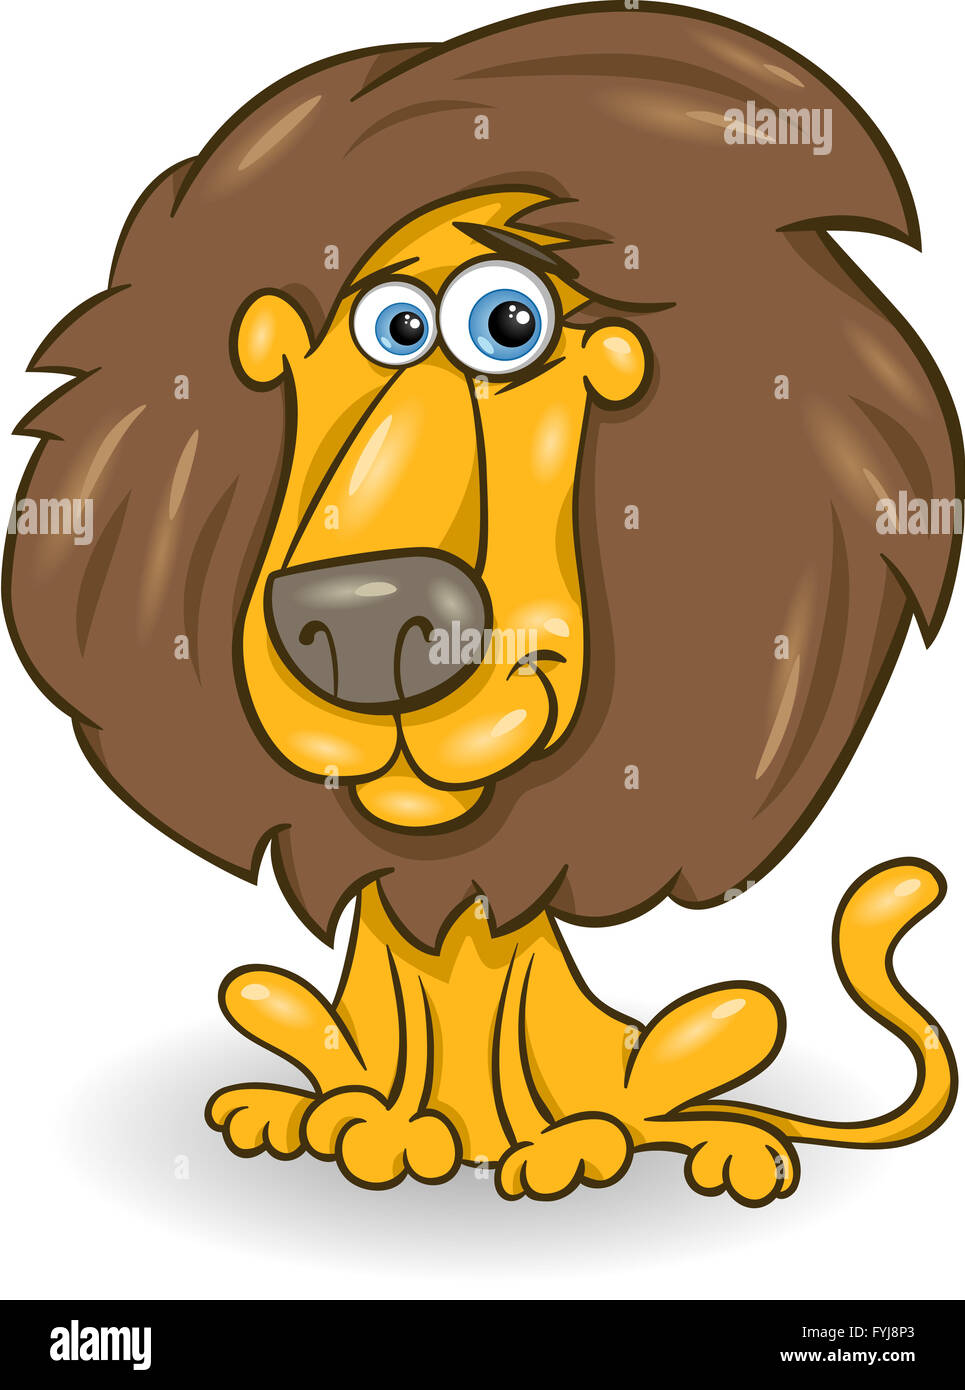 funny lion cartoon illustration Stock Photo - Alamy